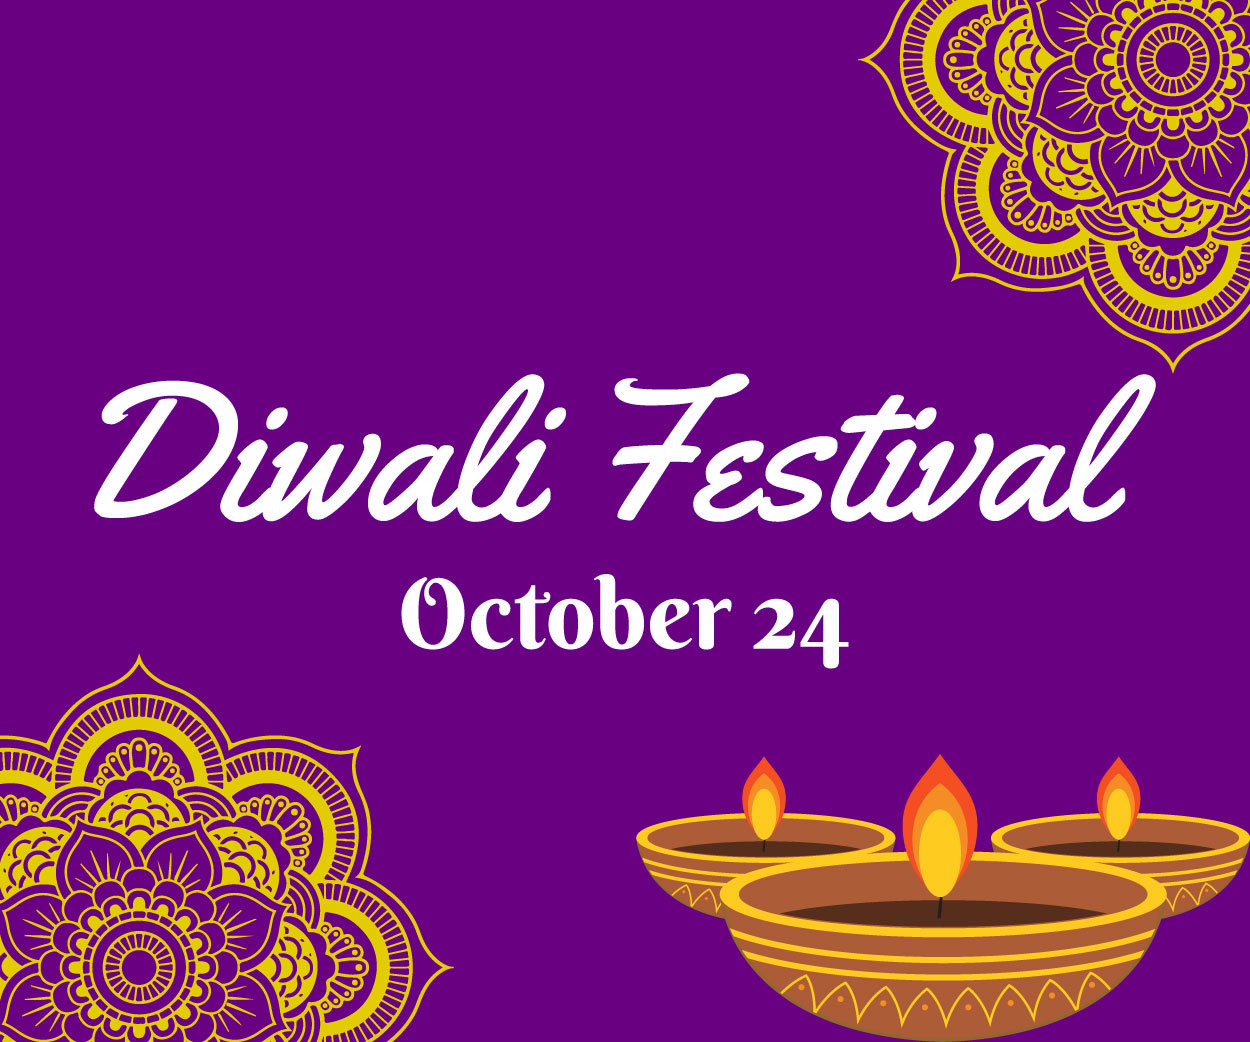 Free Diwali Photo Banner